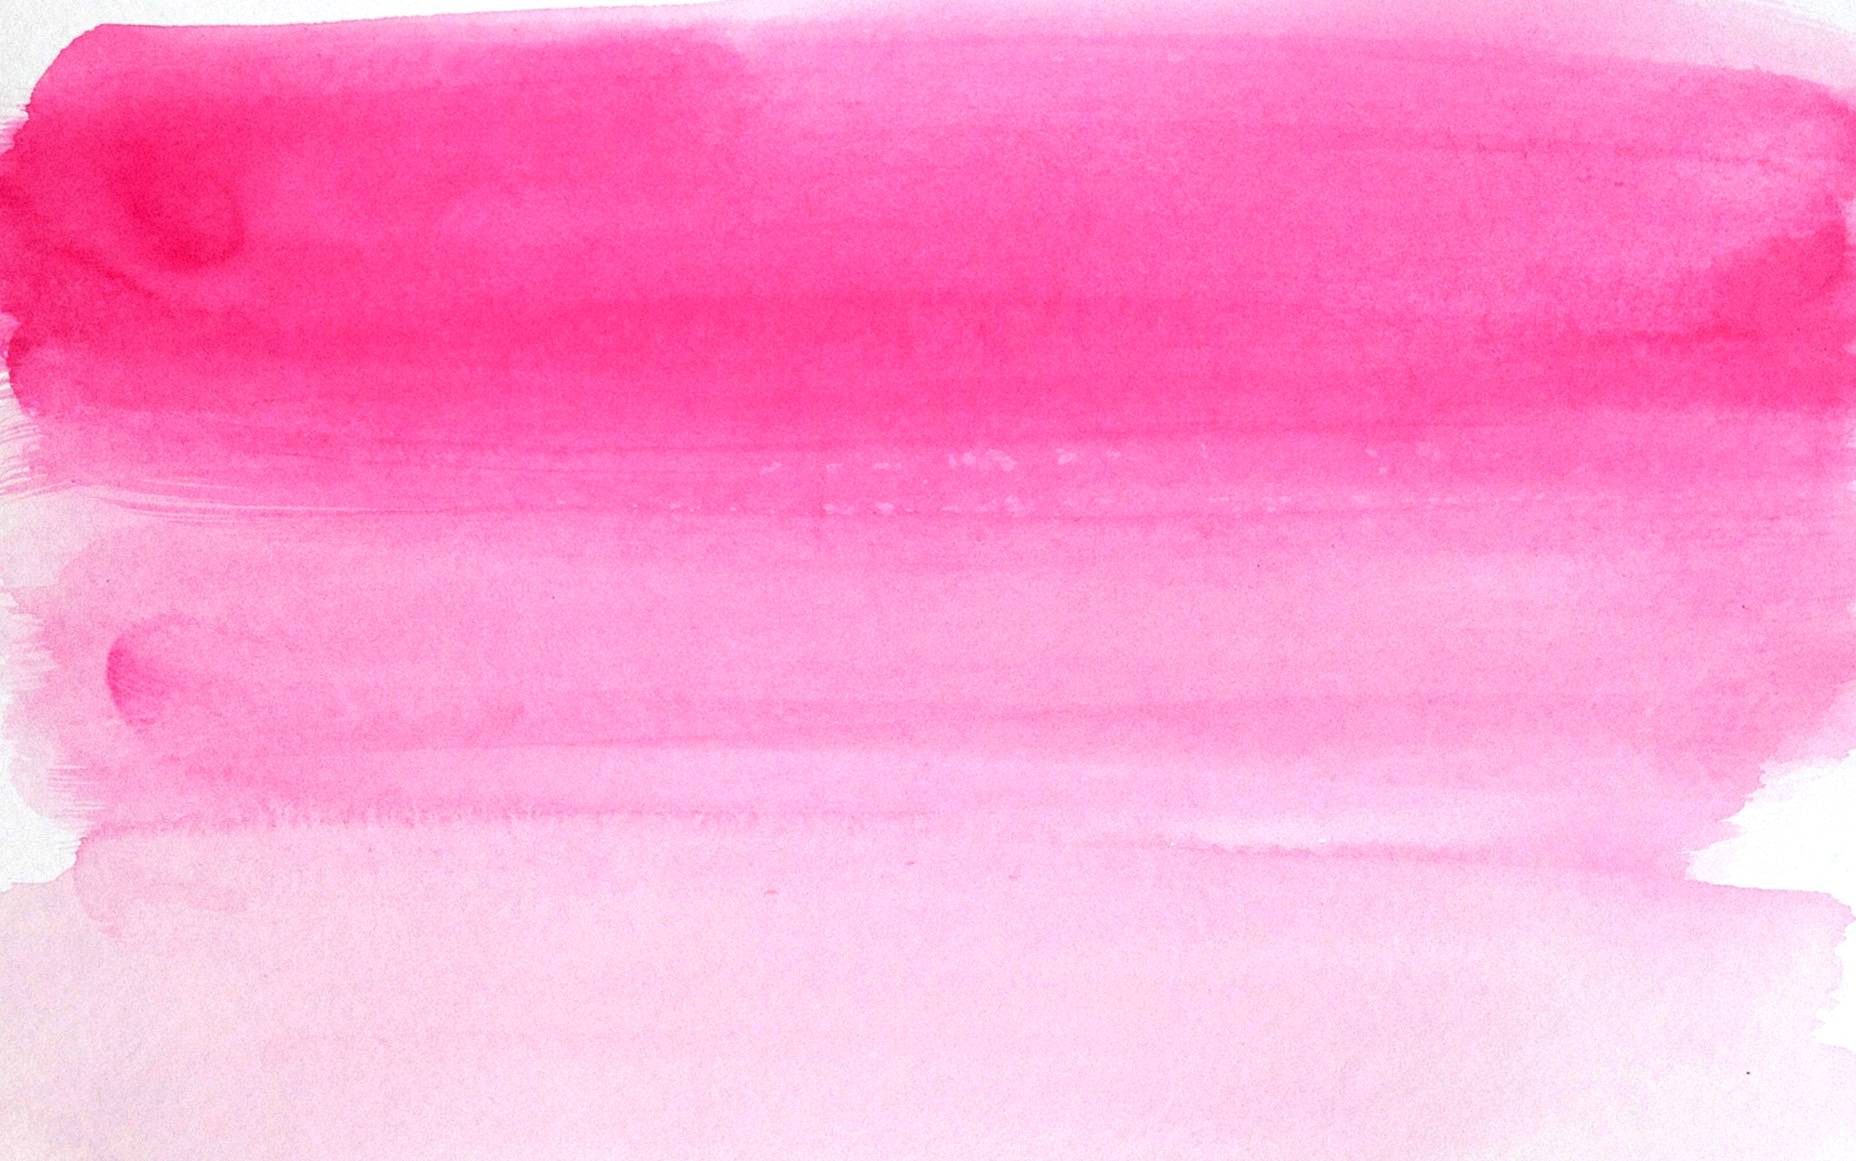 Pink Watercolor Wallpapers - Wallpaper Cave